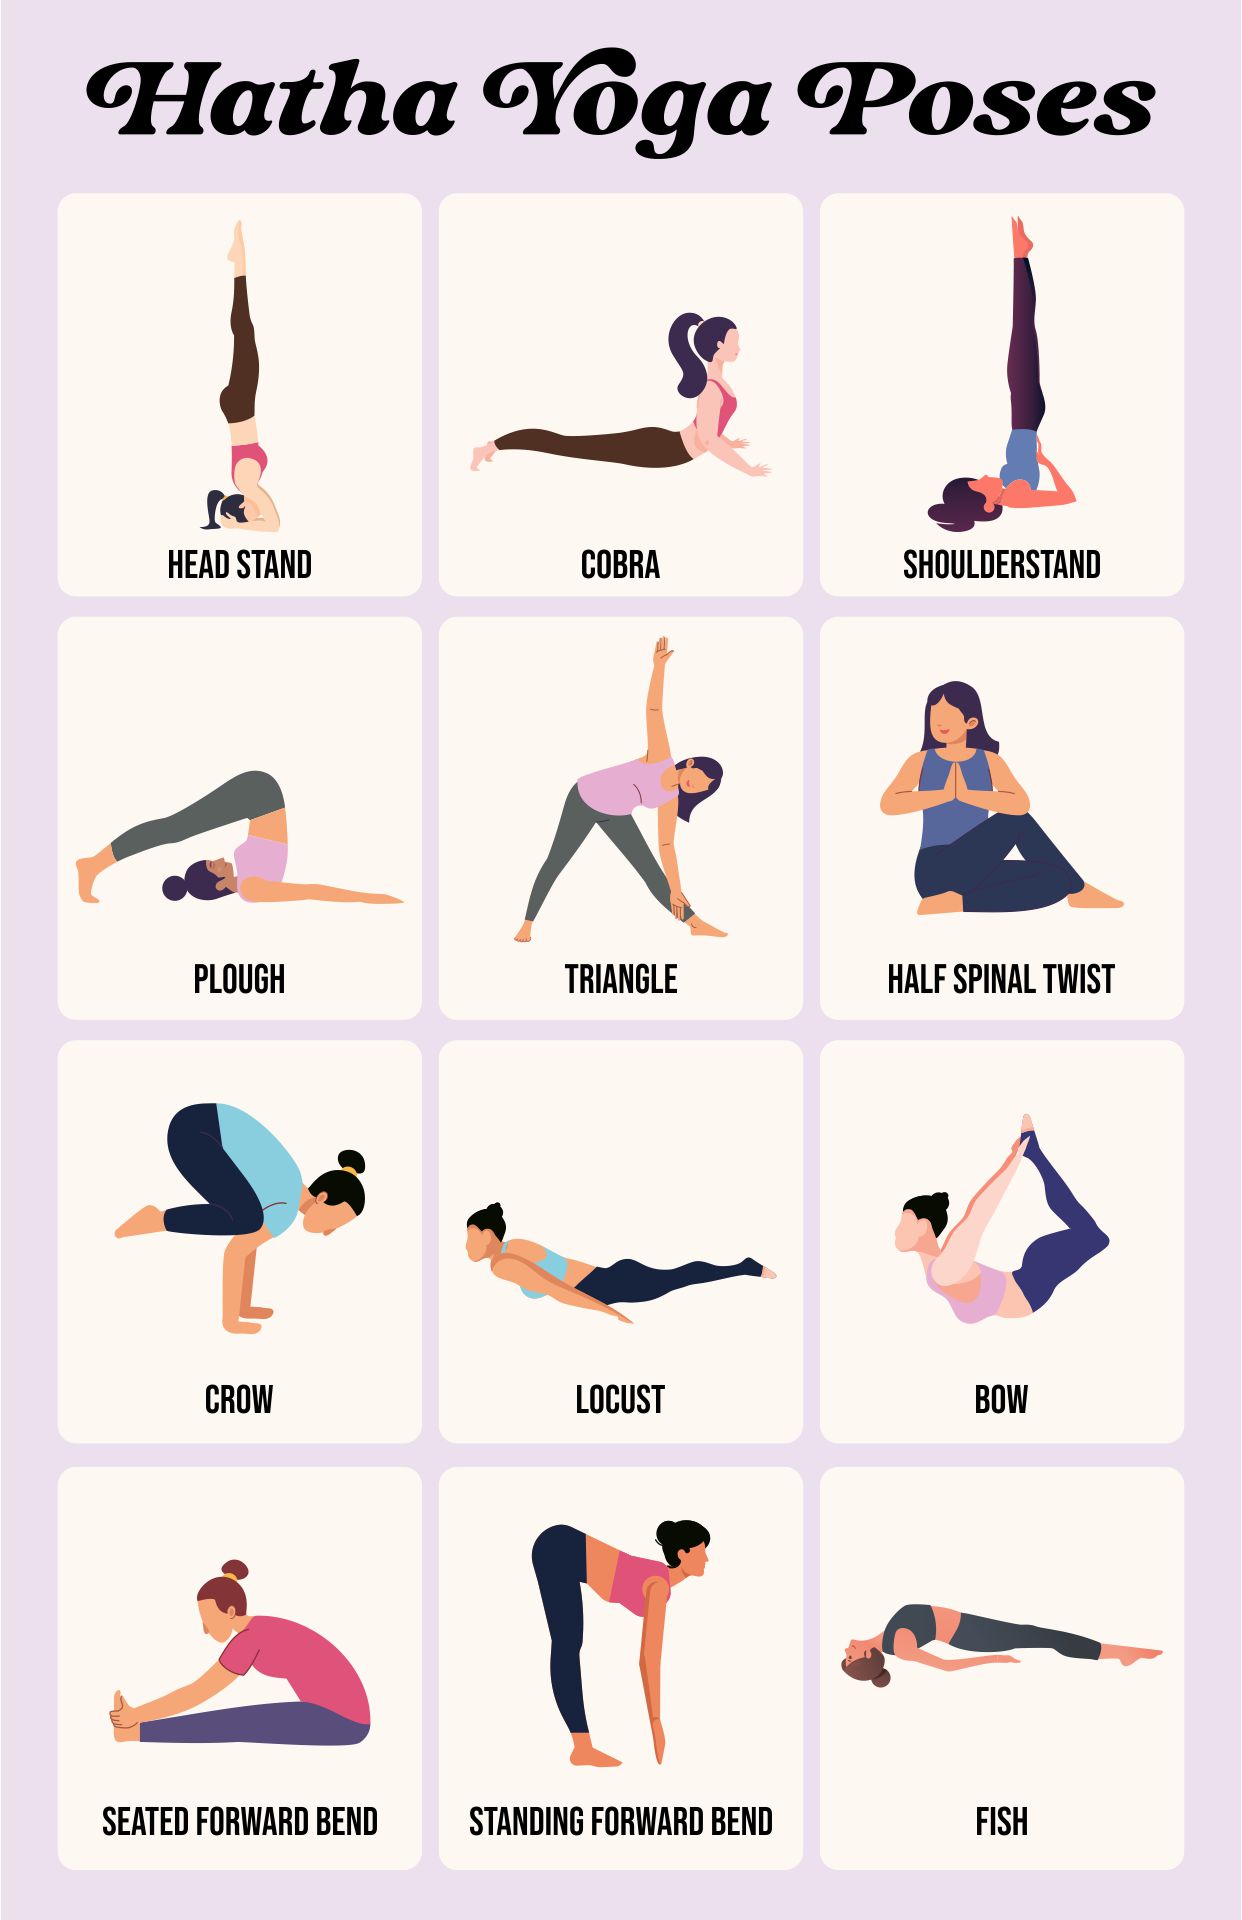 Bikram Yoga. Benefits of Bikram Yoga | by Himalayan Yoga Association |  Medium